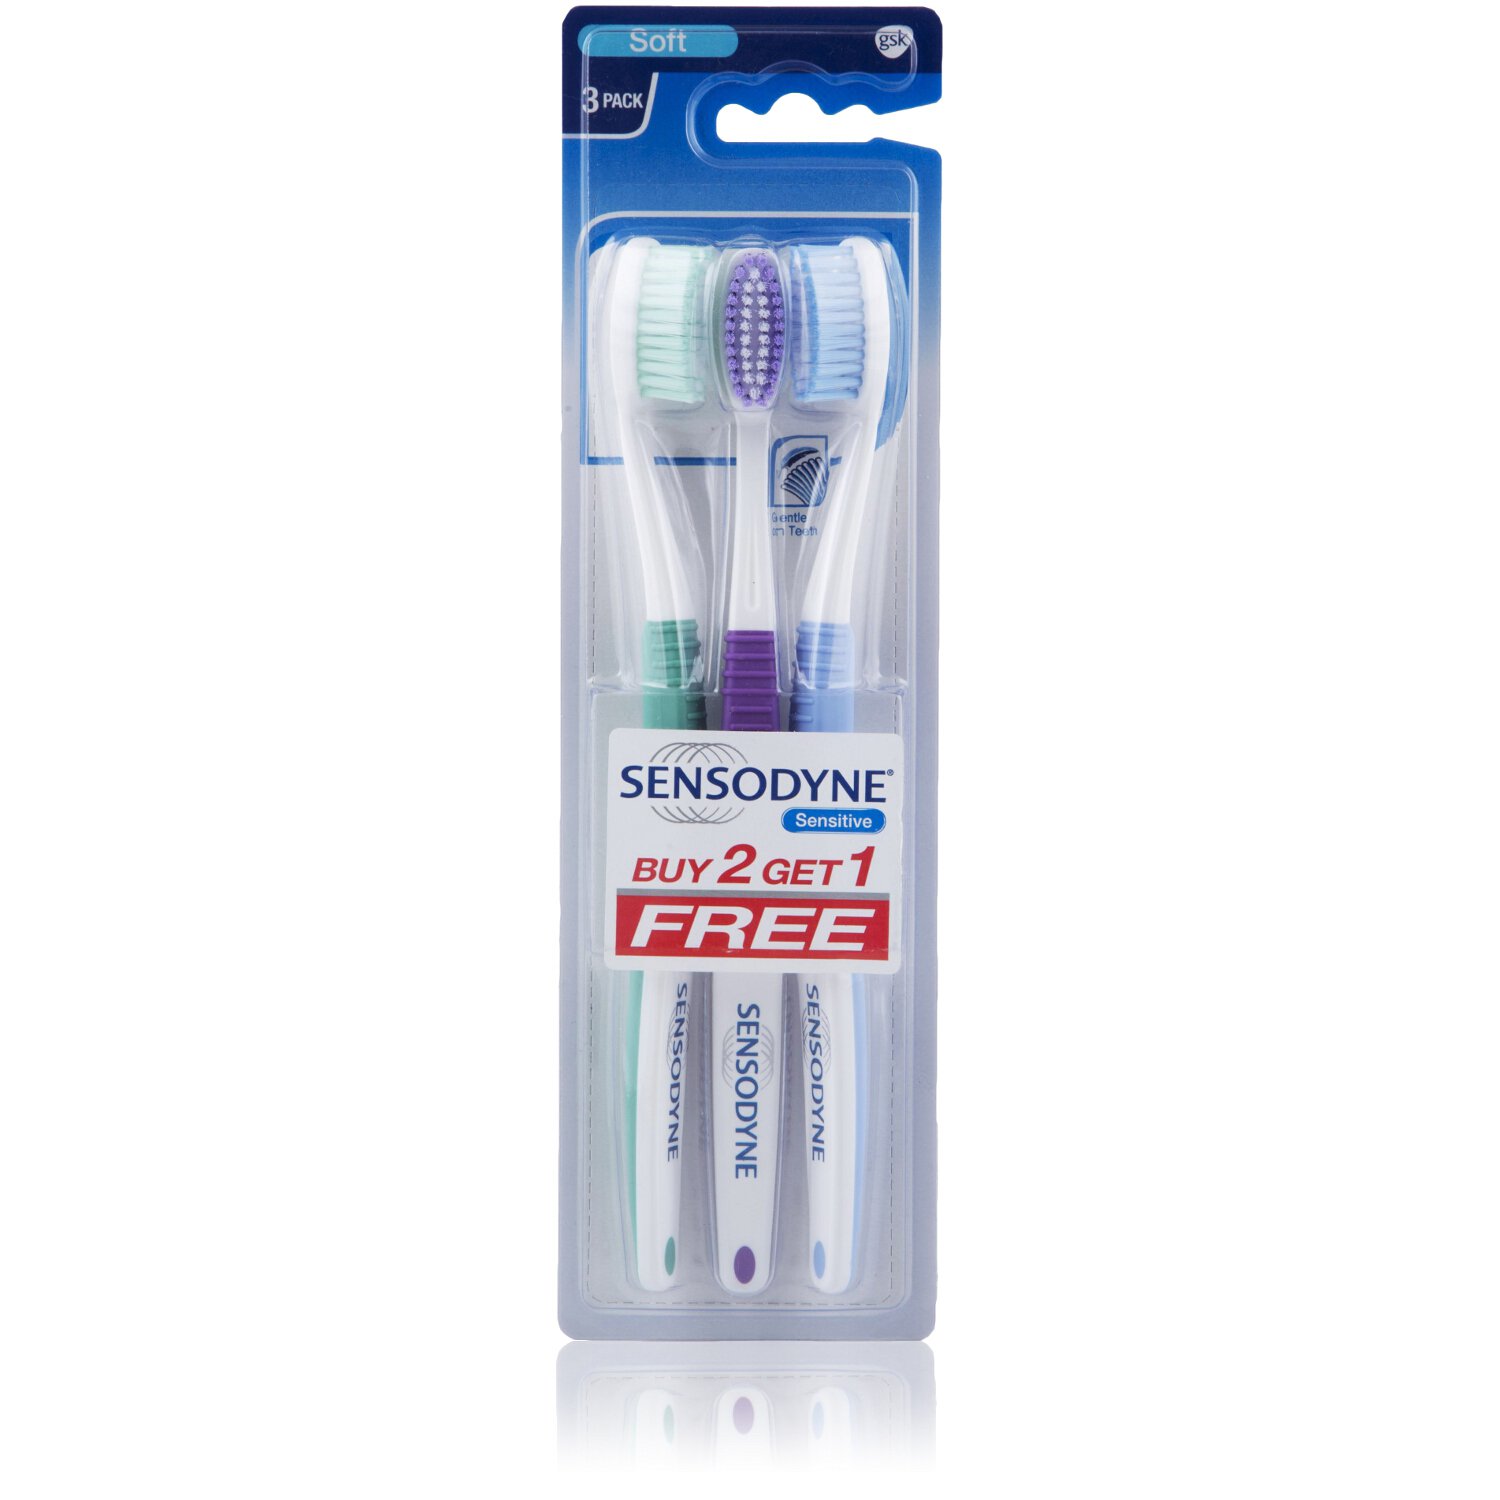 Sensodyne Sensitive Toothbrush Buy 2 + 1 pack